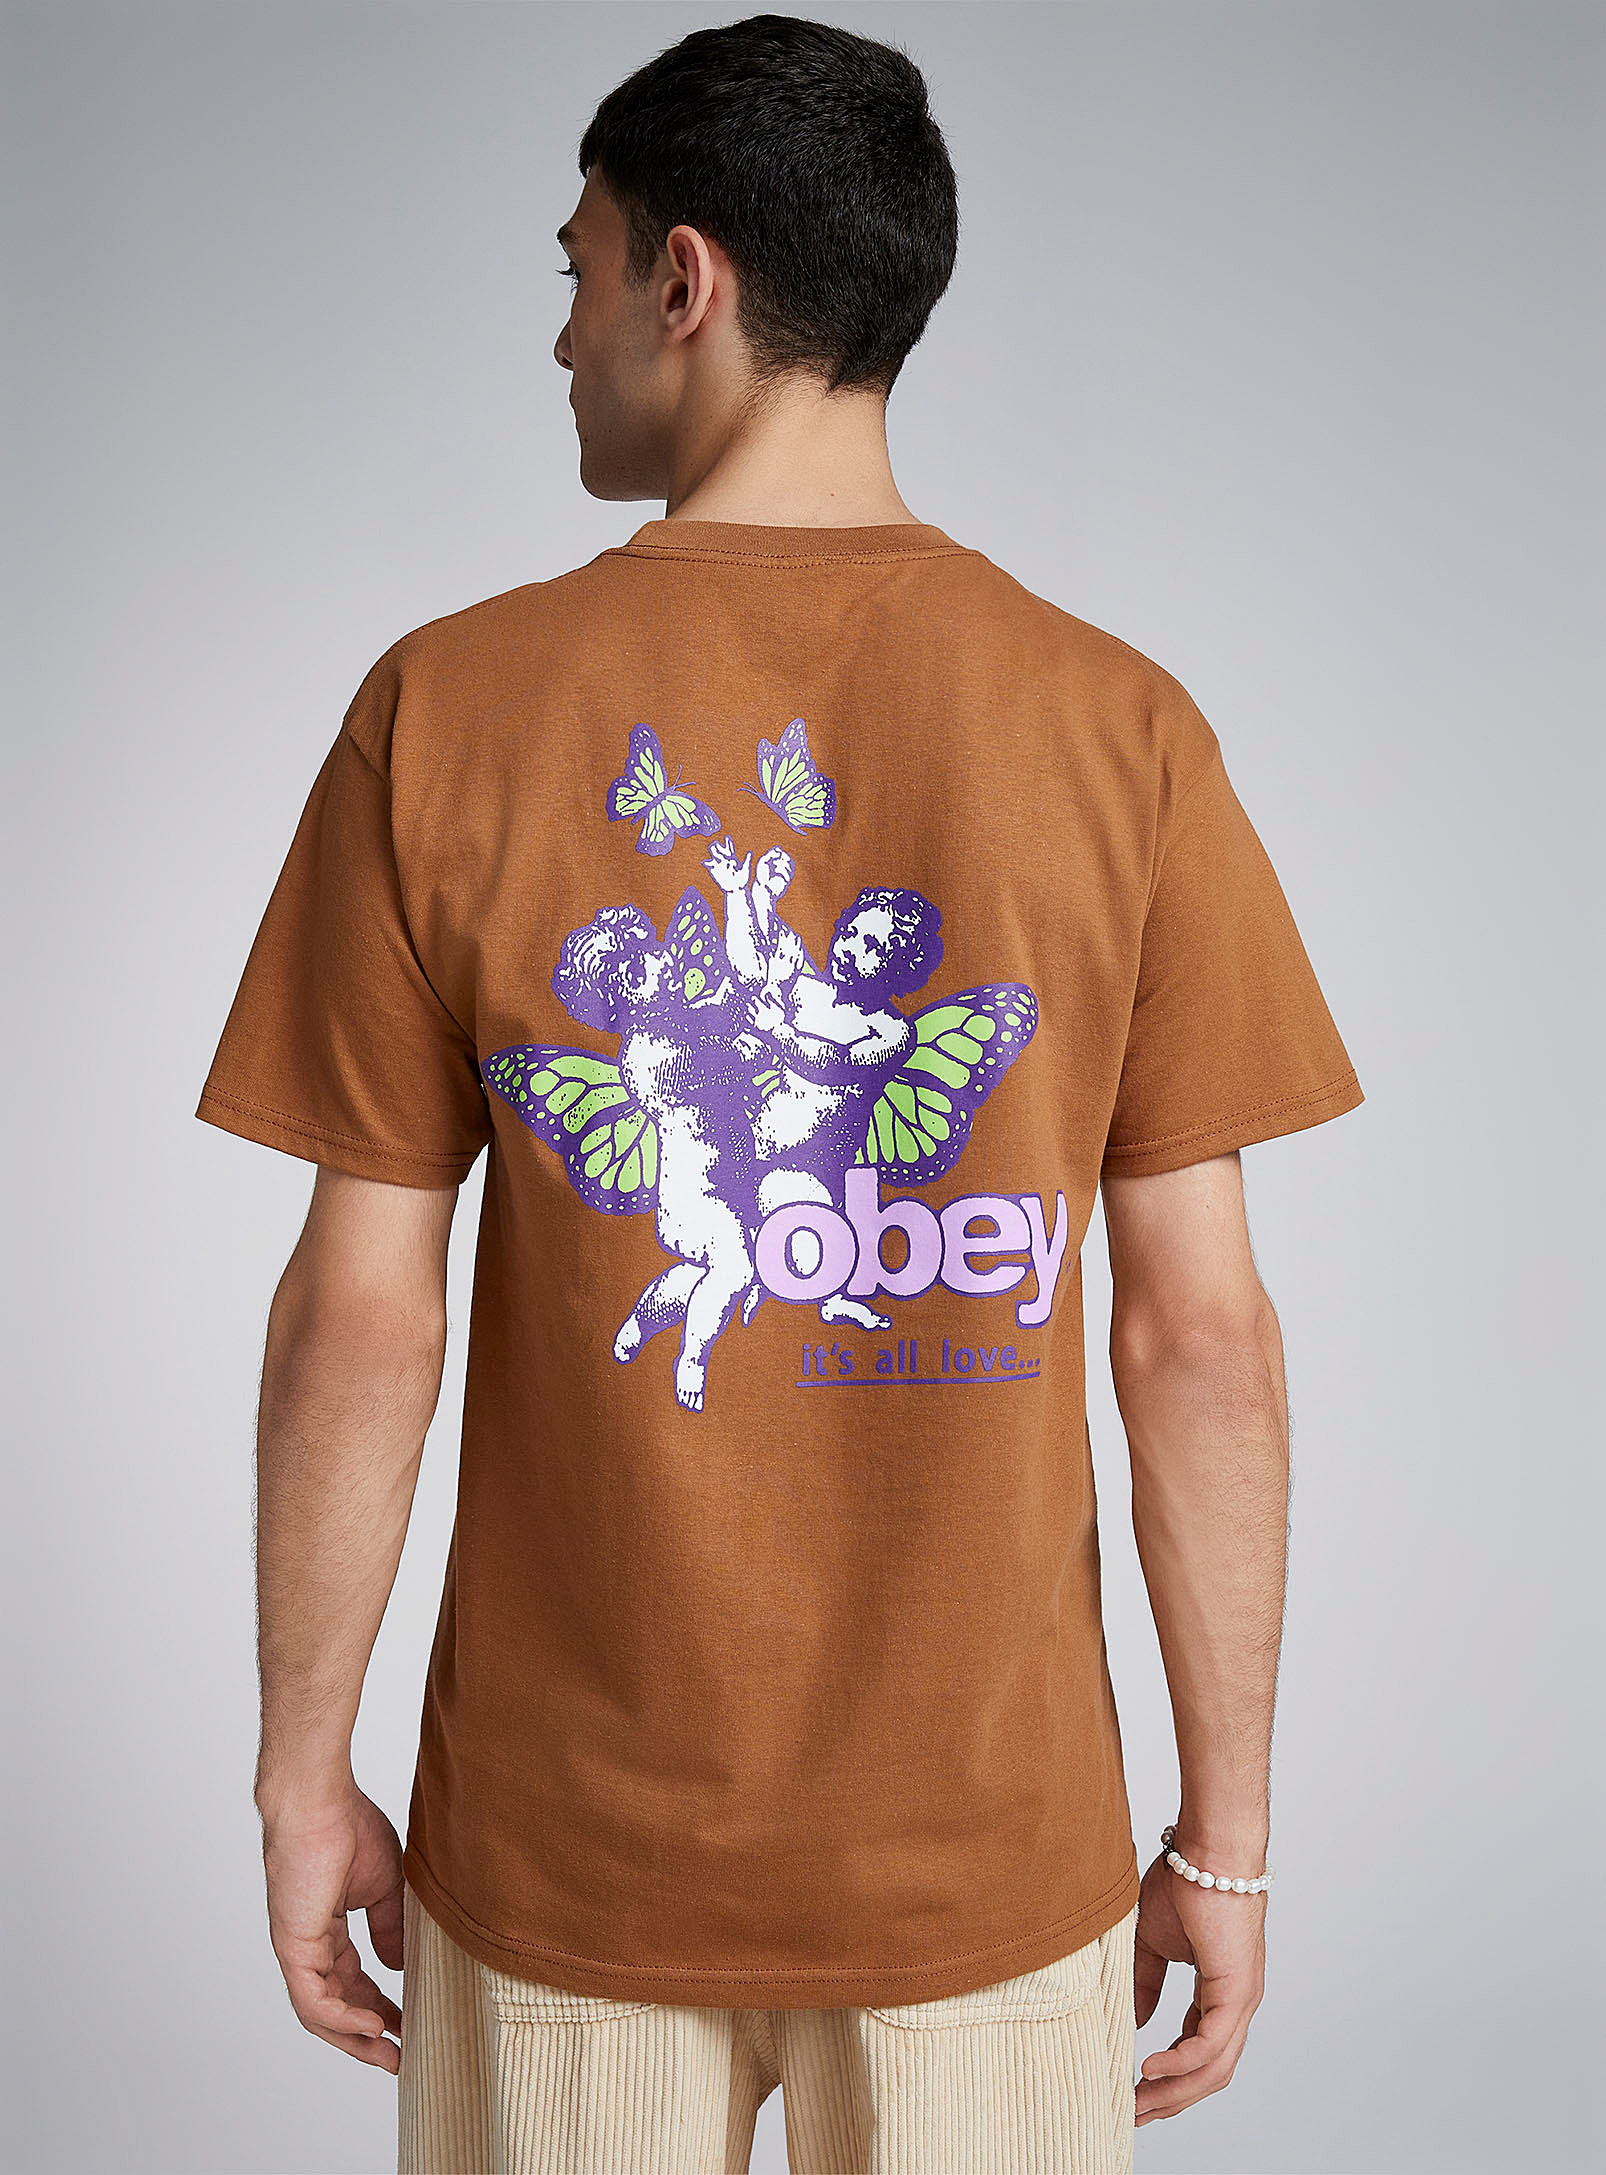 Obey - Men's Heavenly paradise T-shirt